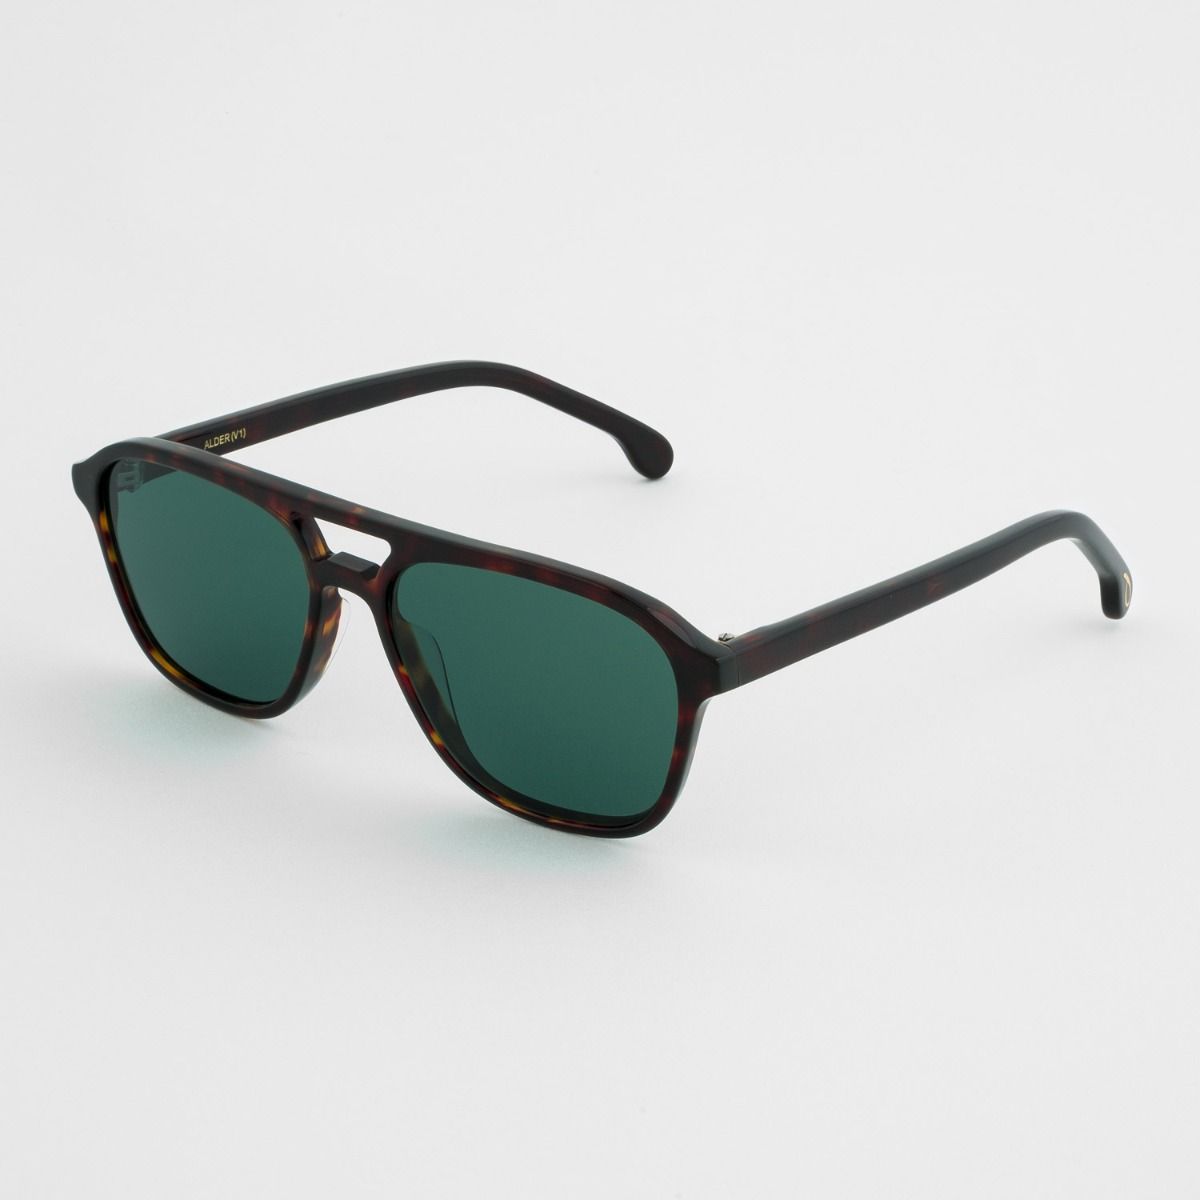 Paul Smith Alder Aviator Sunglasses (Small)